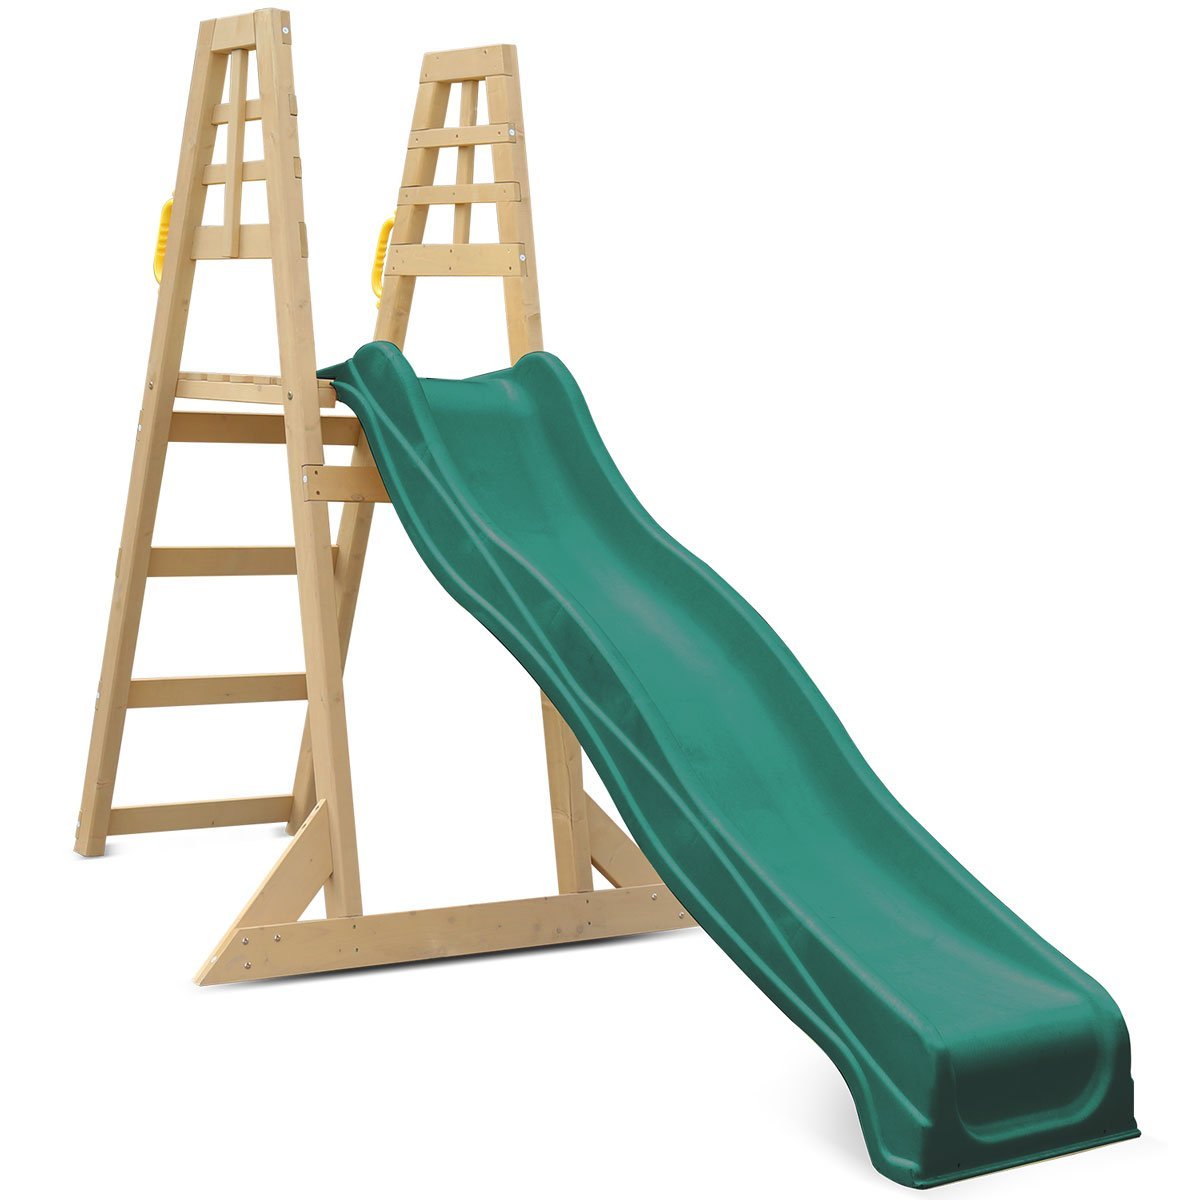 Buy Sunshine 2.2m Slide Green: Endless Outdoor Fun for Kids